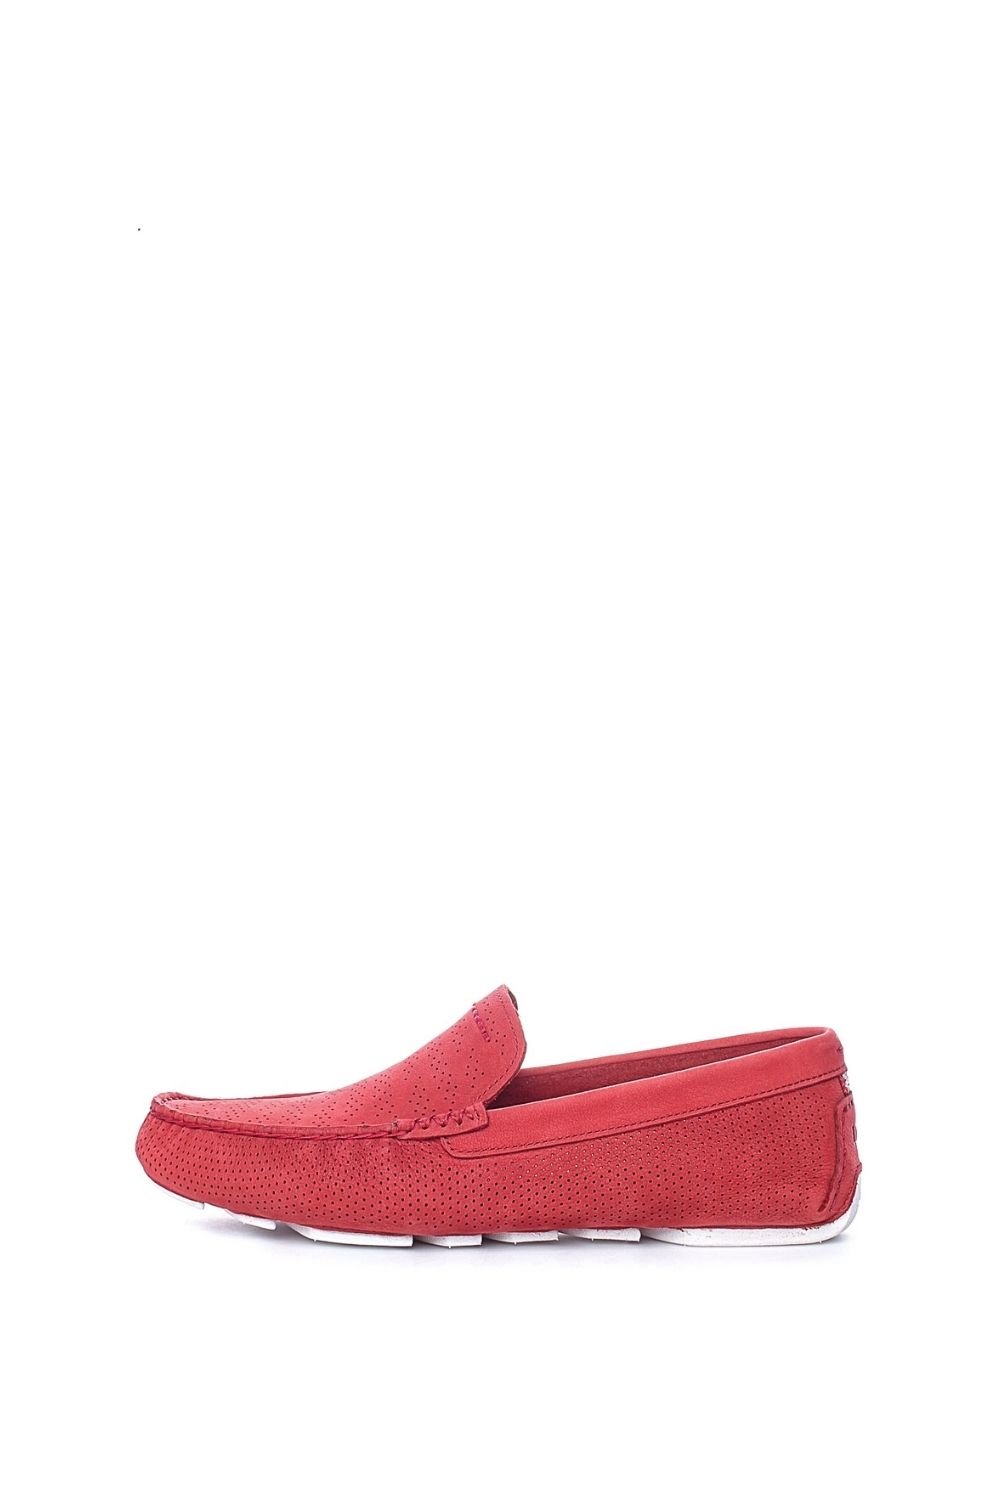 UGG - Ανδρικά παπούτσια Henrick Stripe Perf κόκκινα Ανδρικά/Παπούτσια/Μοκασίνια-Loafers